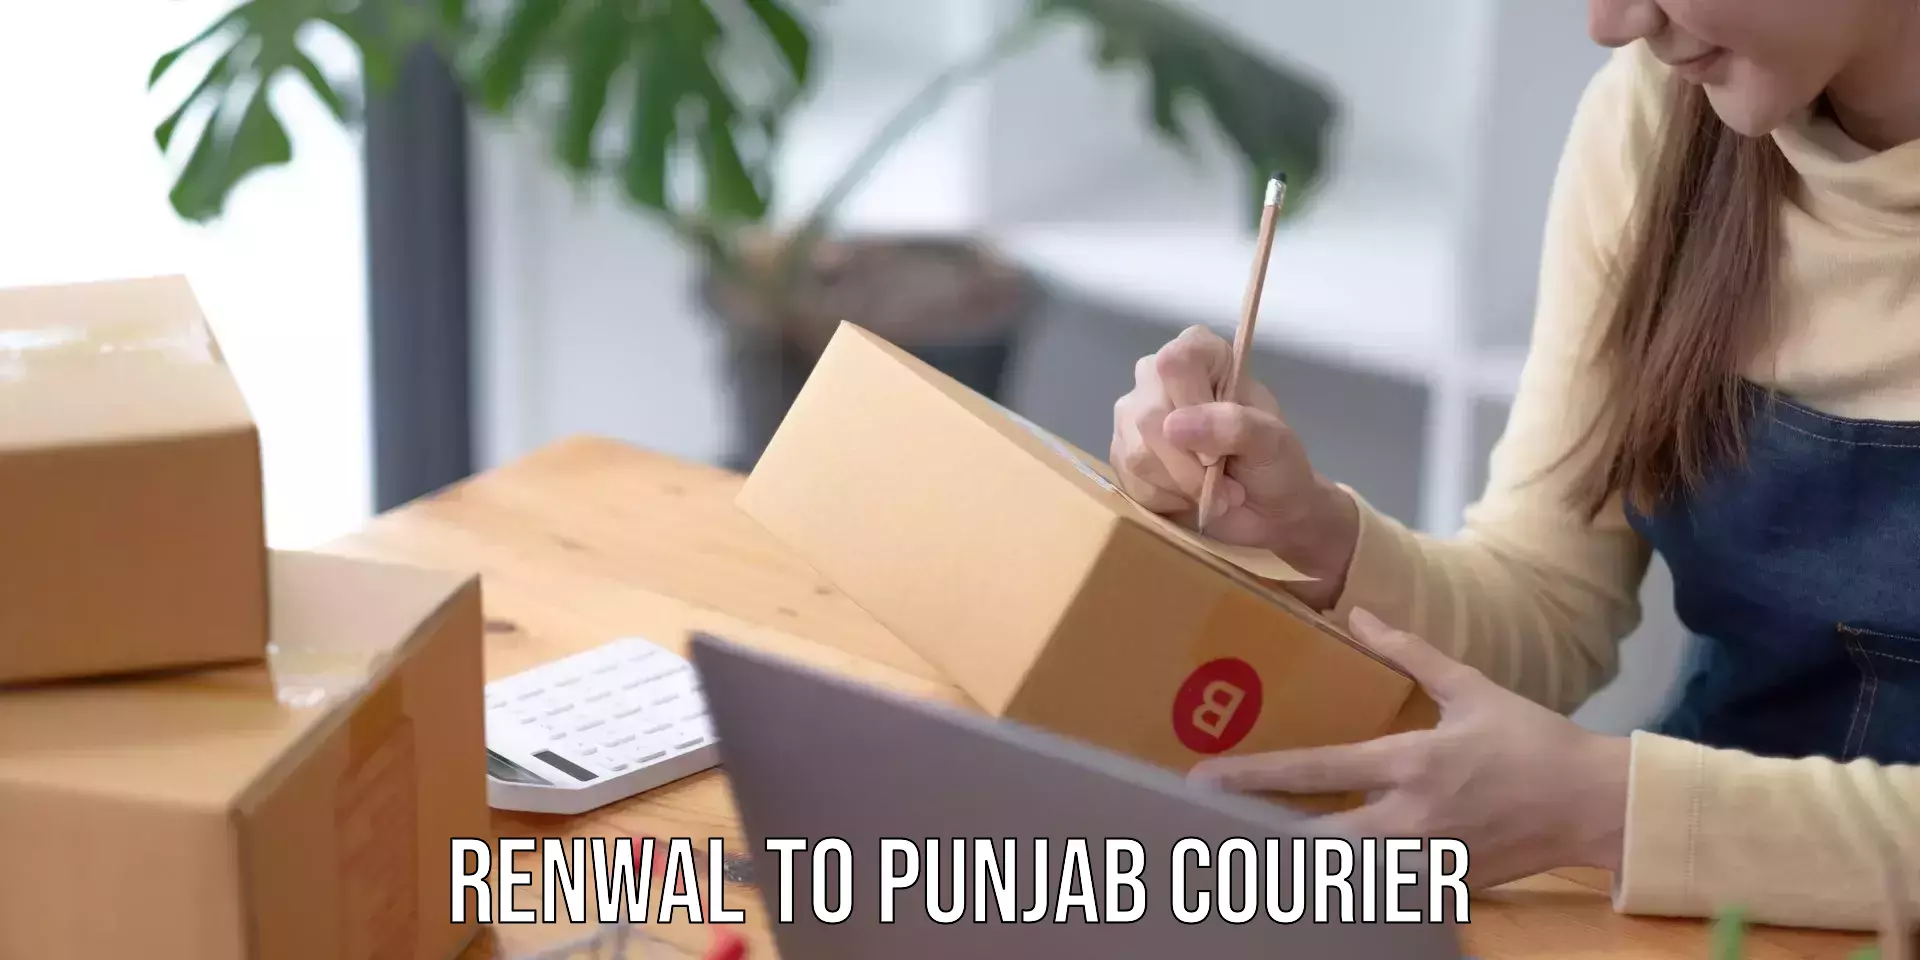 Return courier service Renwal to Punjab